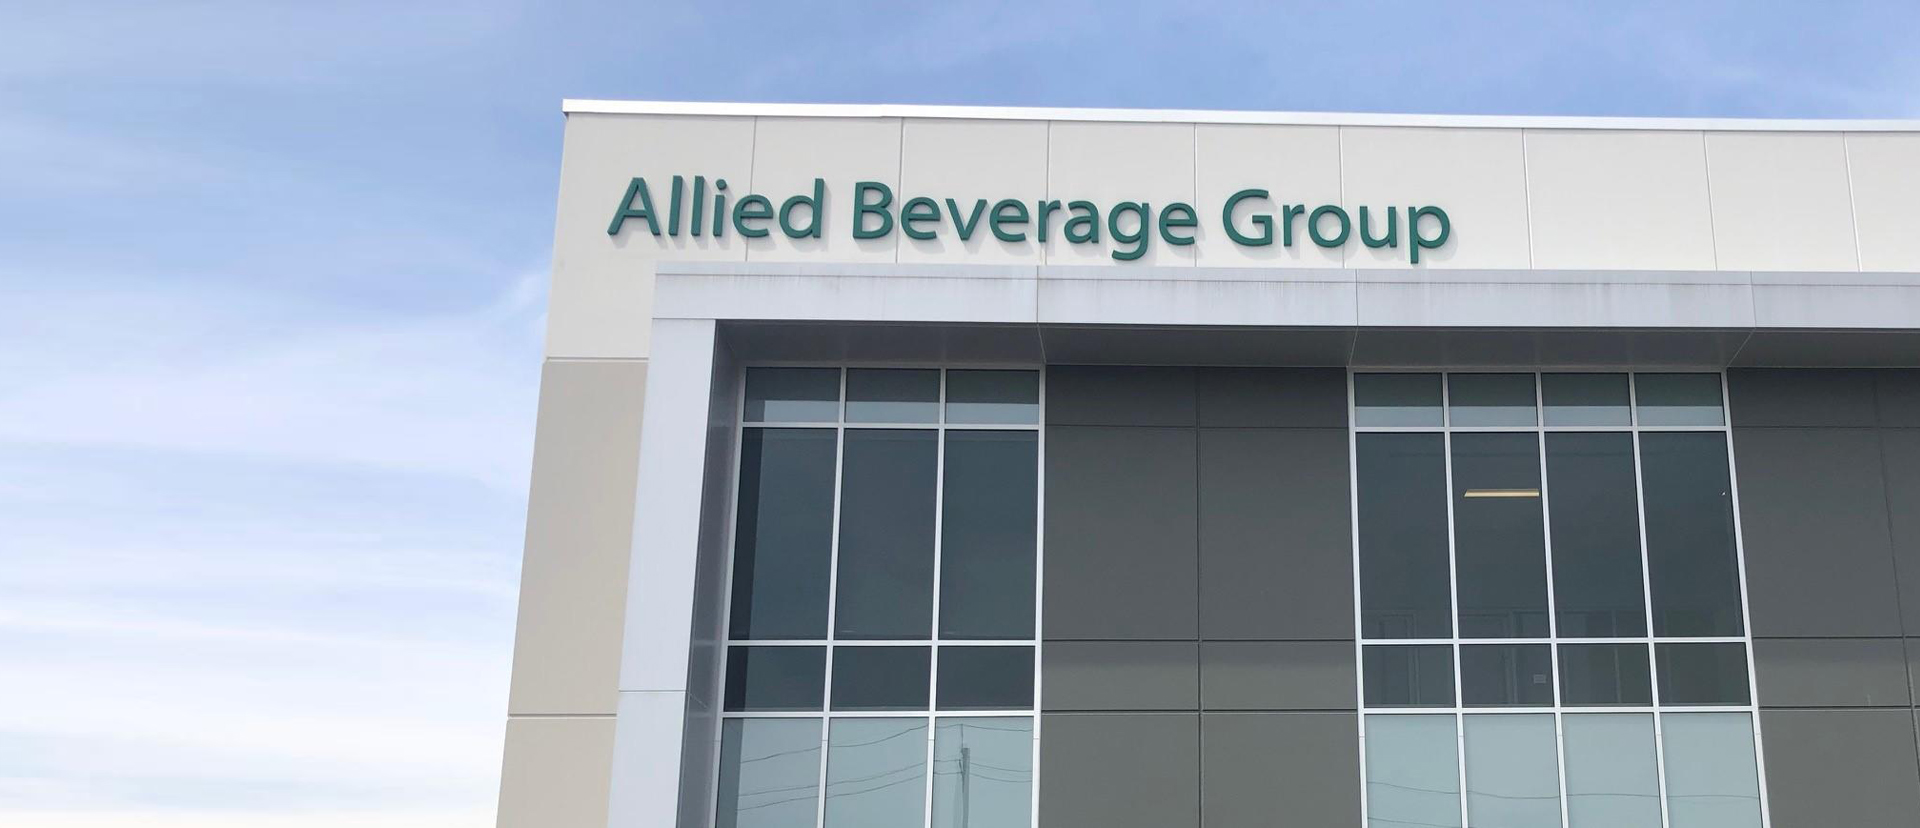 Allied Beverage Group Channel Letter Sign